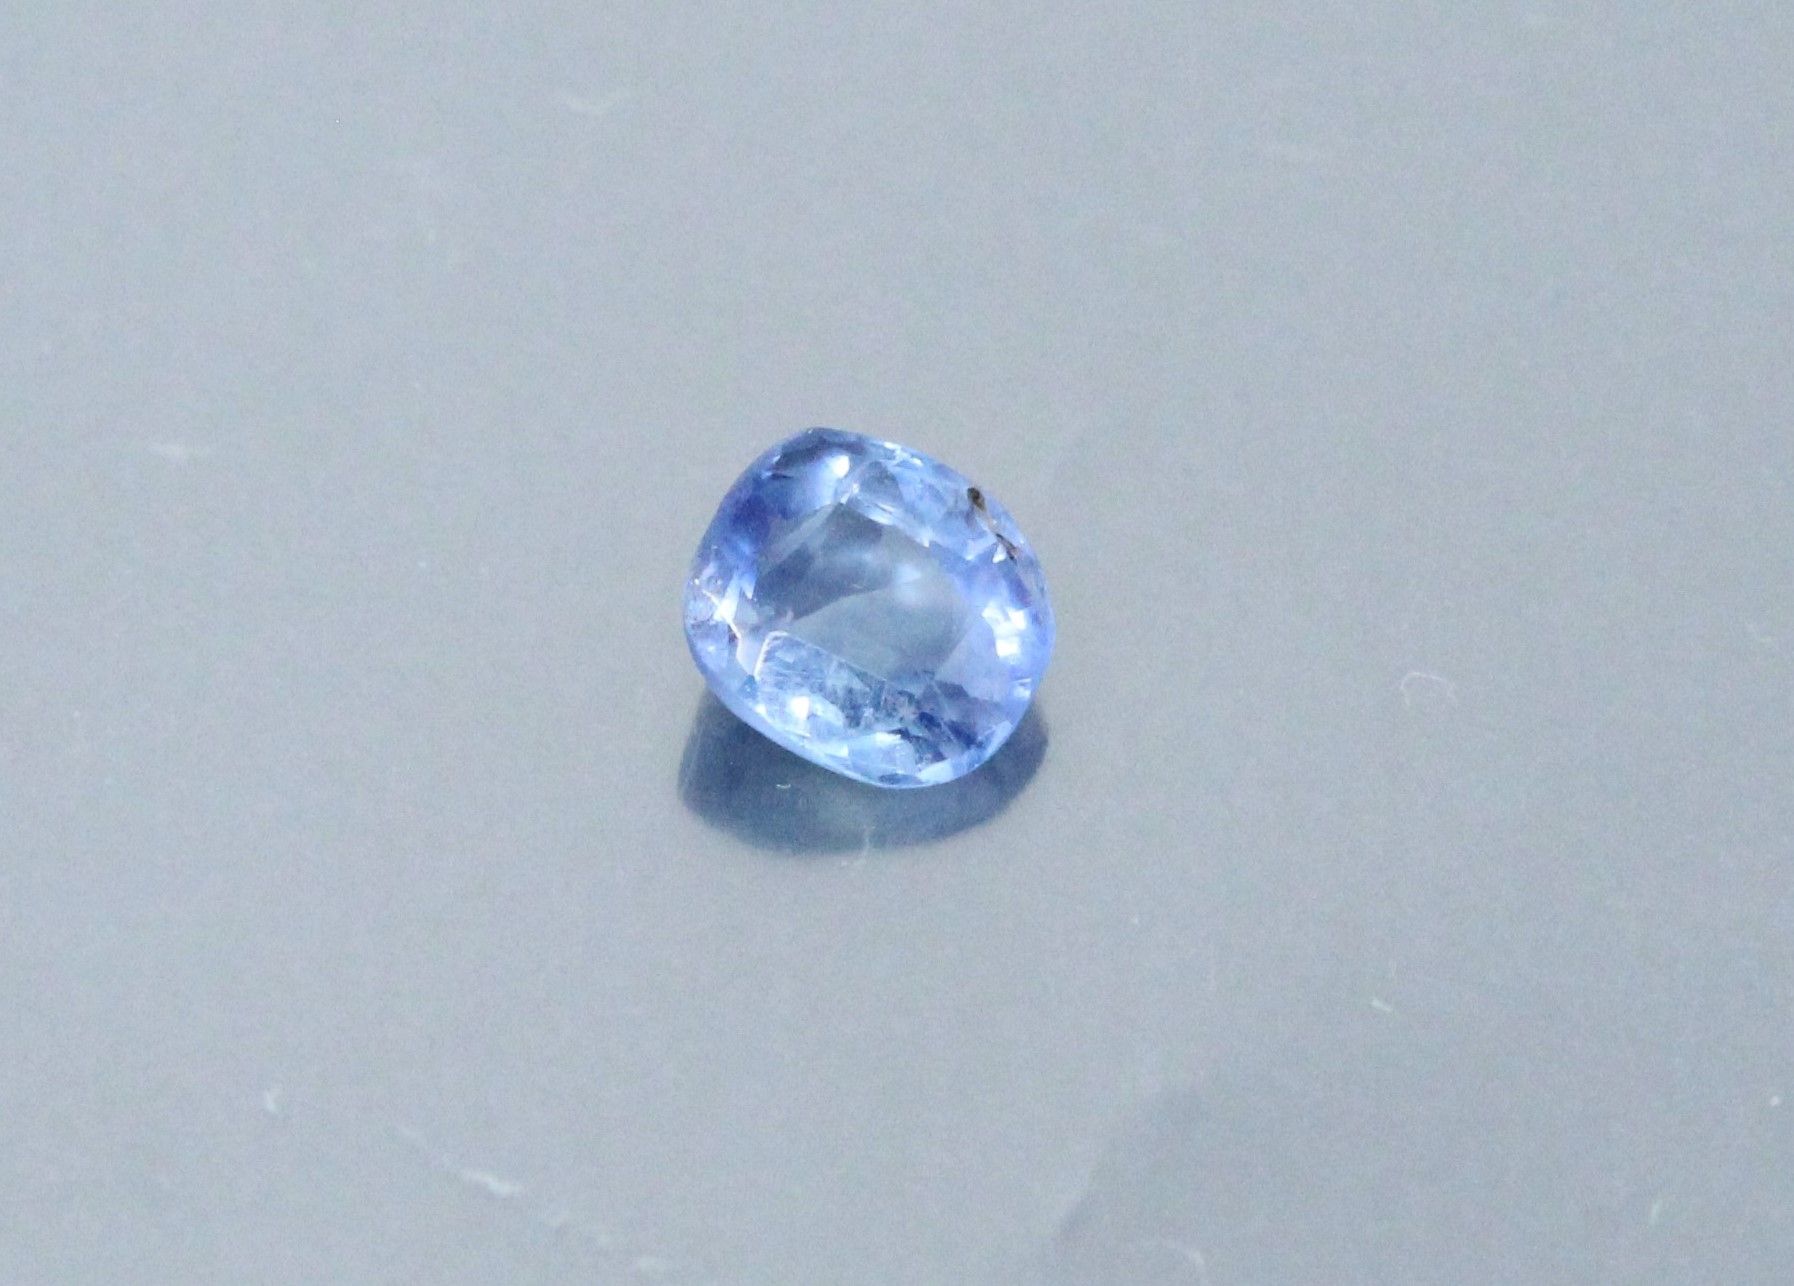 Null 枕形蓝宝石，纸质。

锡兰，未加热。

重量：约1.00克拉。